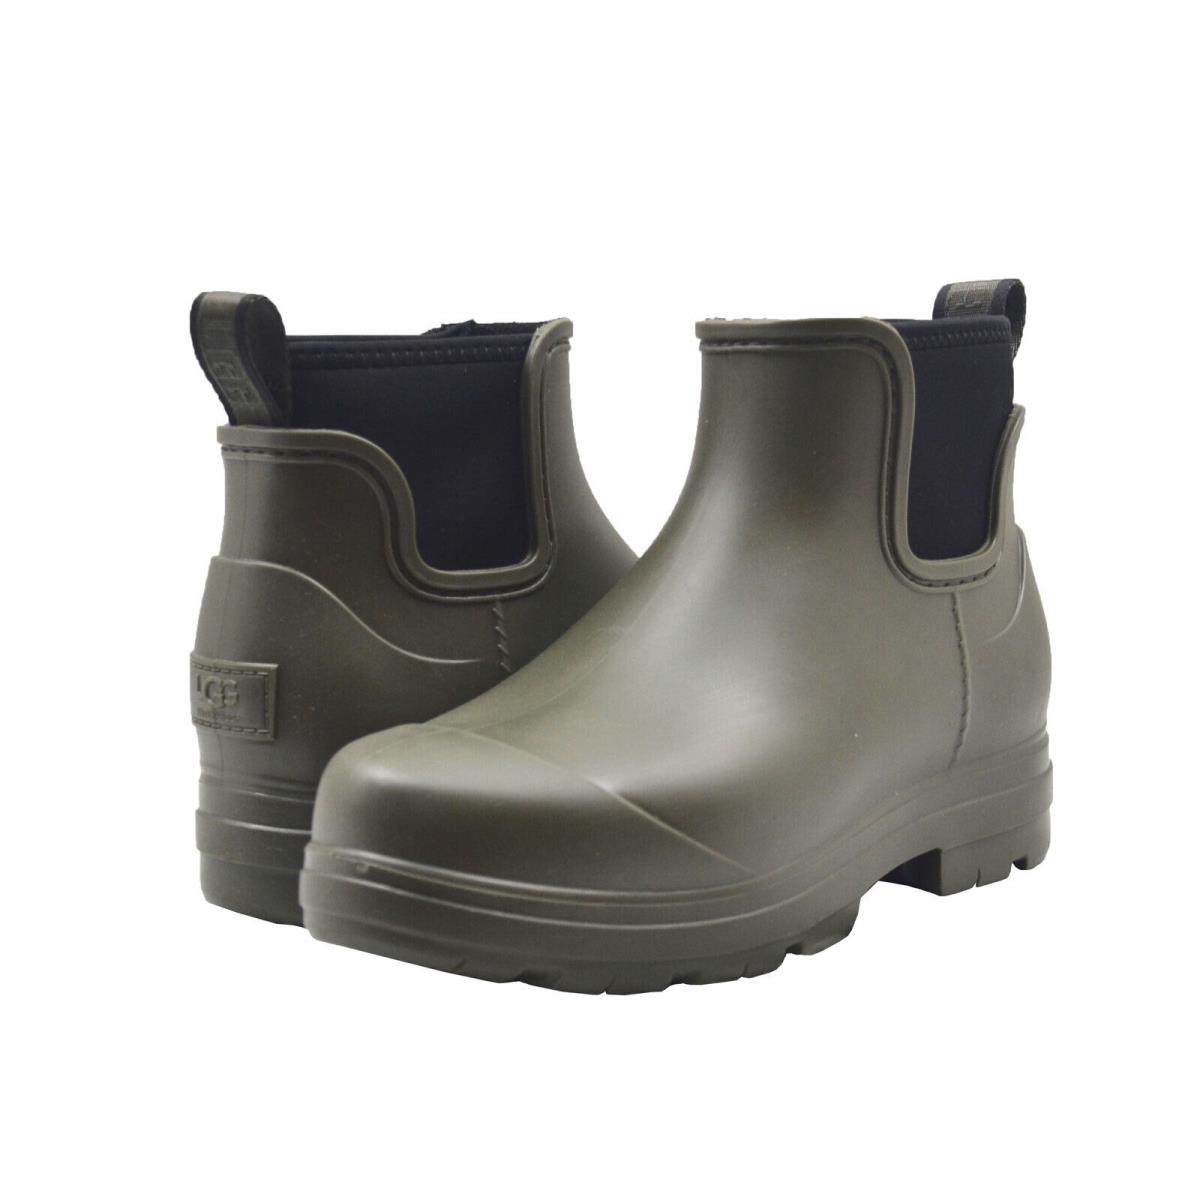 Women`s Shoes Ugg Droplet Waterproof Slip On Chelsea Rain Boots 1130831 Forest - Green